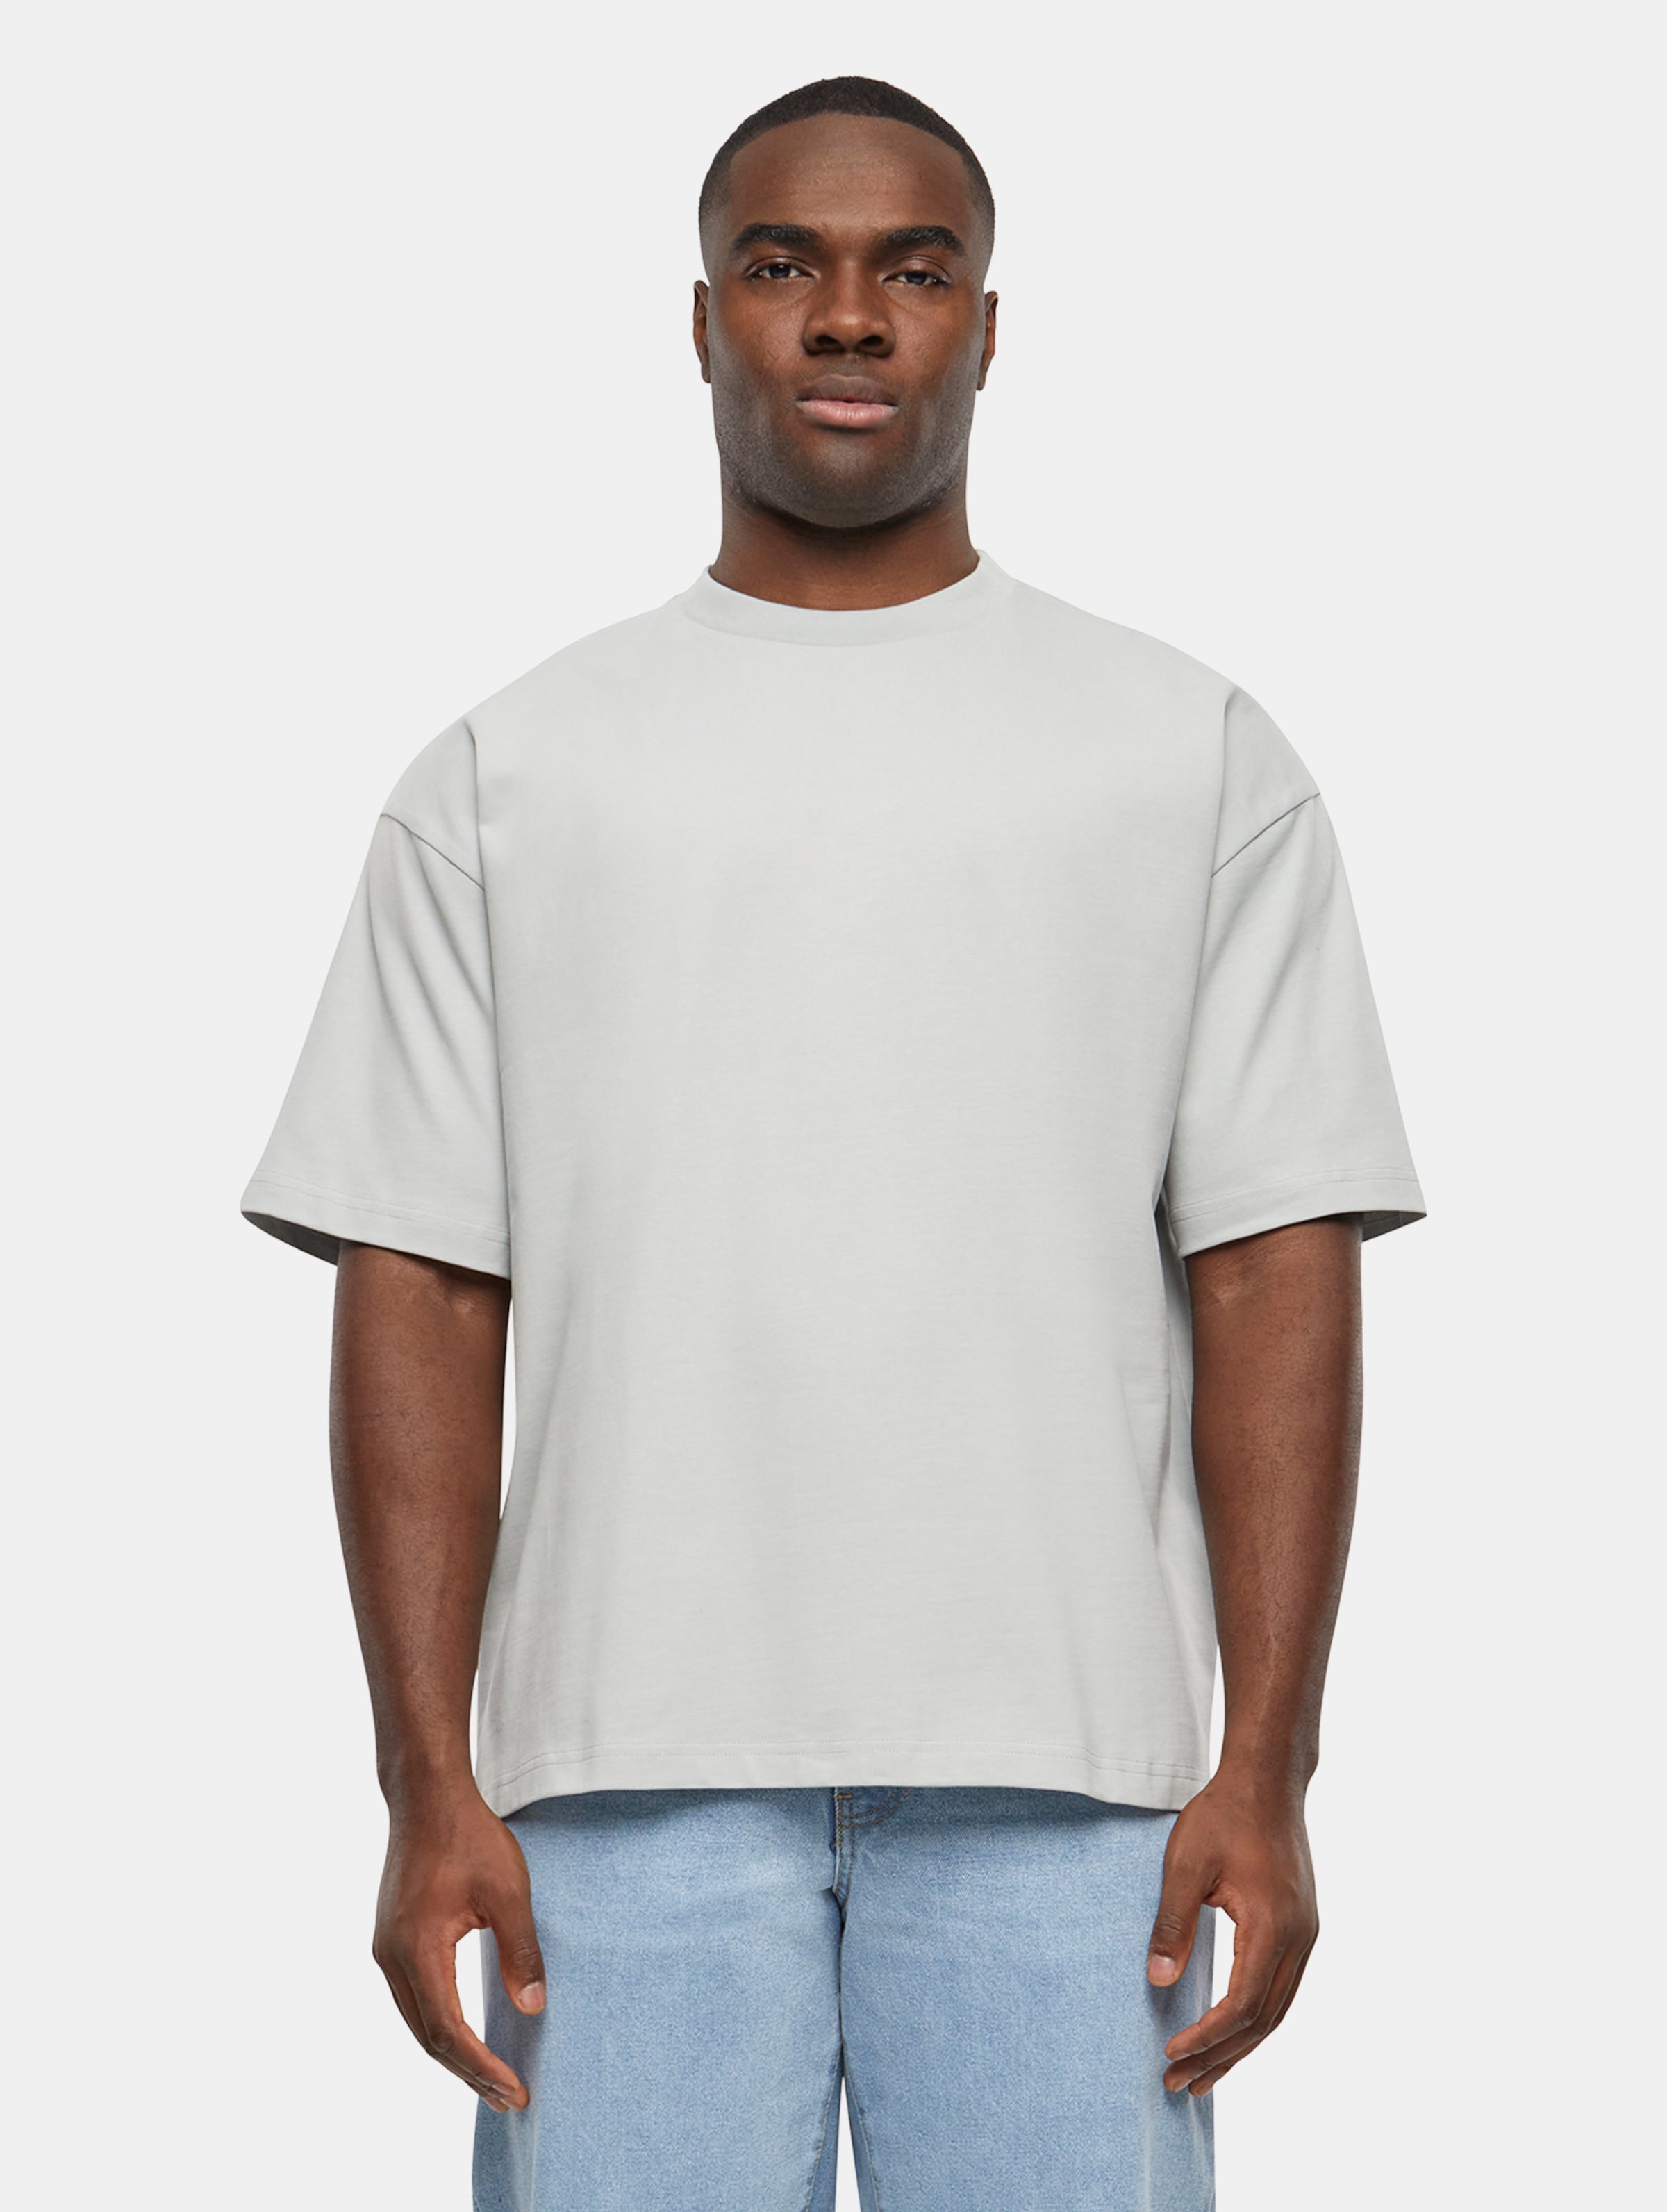 Prohibited Oversized T-Shirts Männer,Unisex op kleur grijs, Maat S